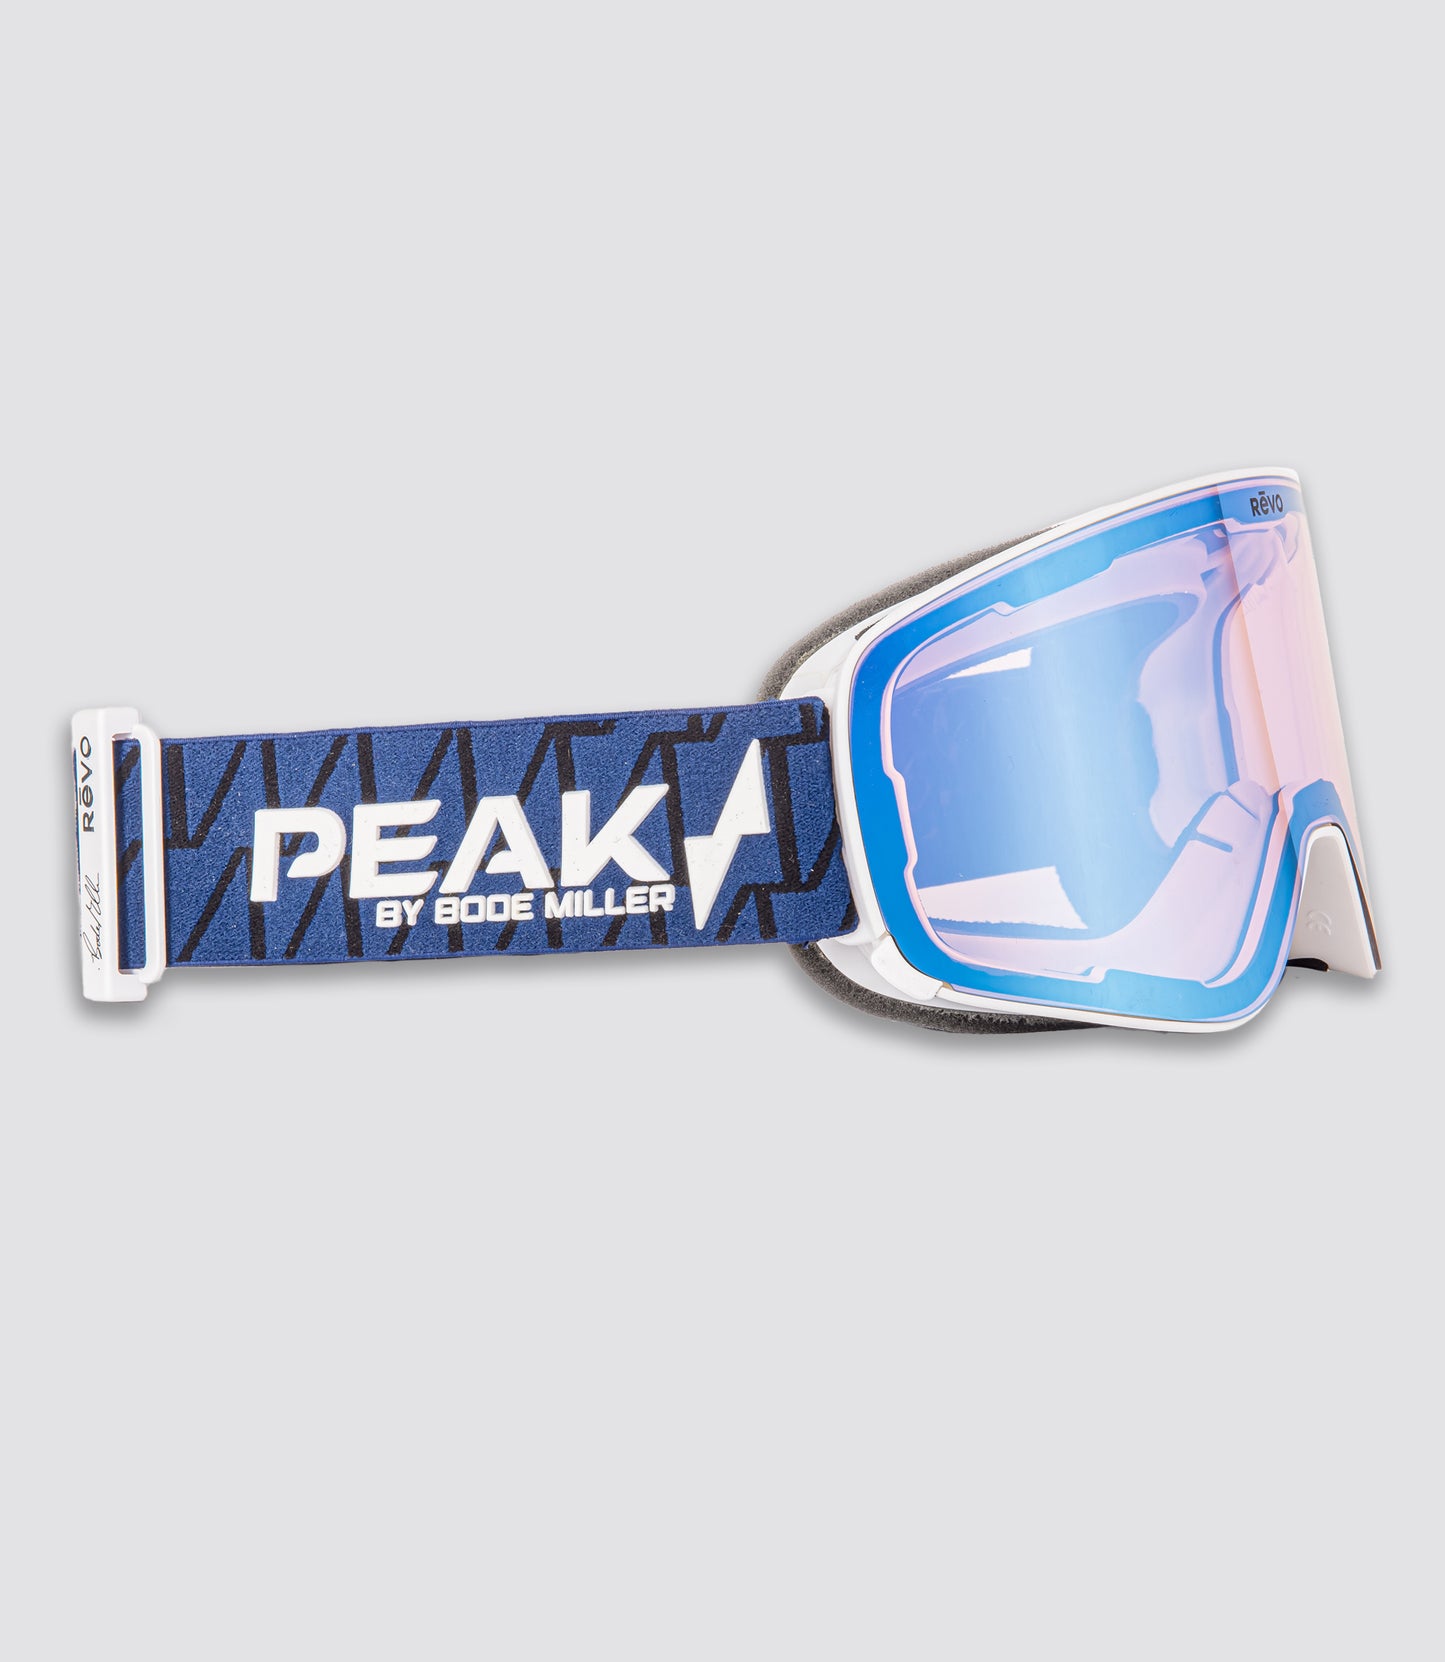 Peak Revo X Bode Miller No. 6 Goggles